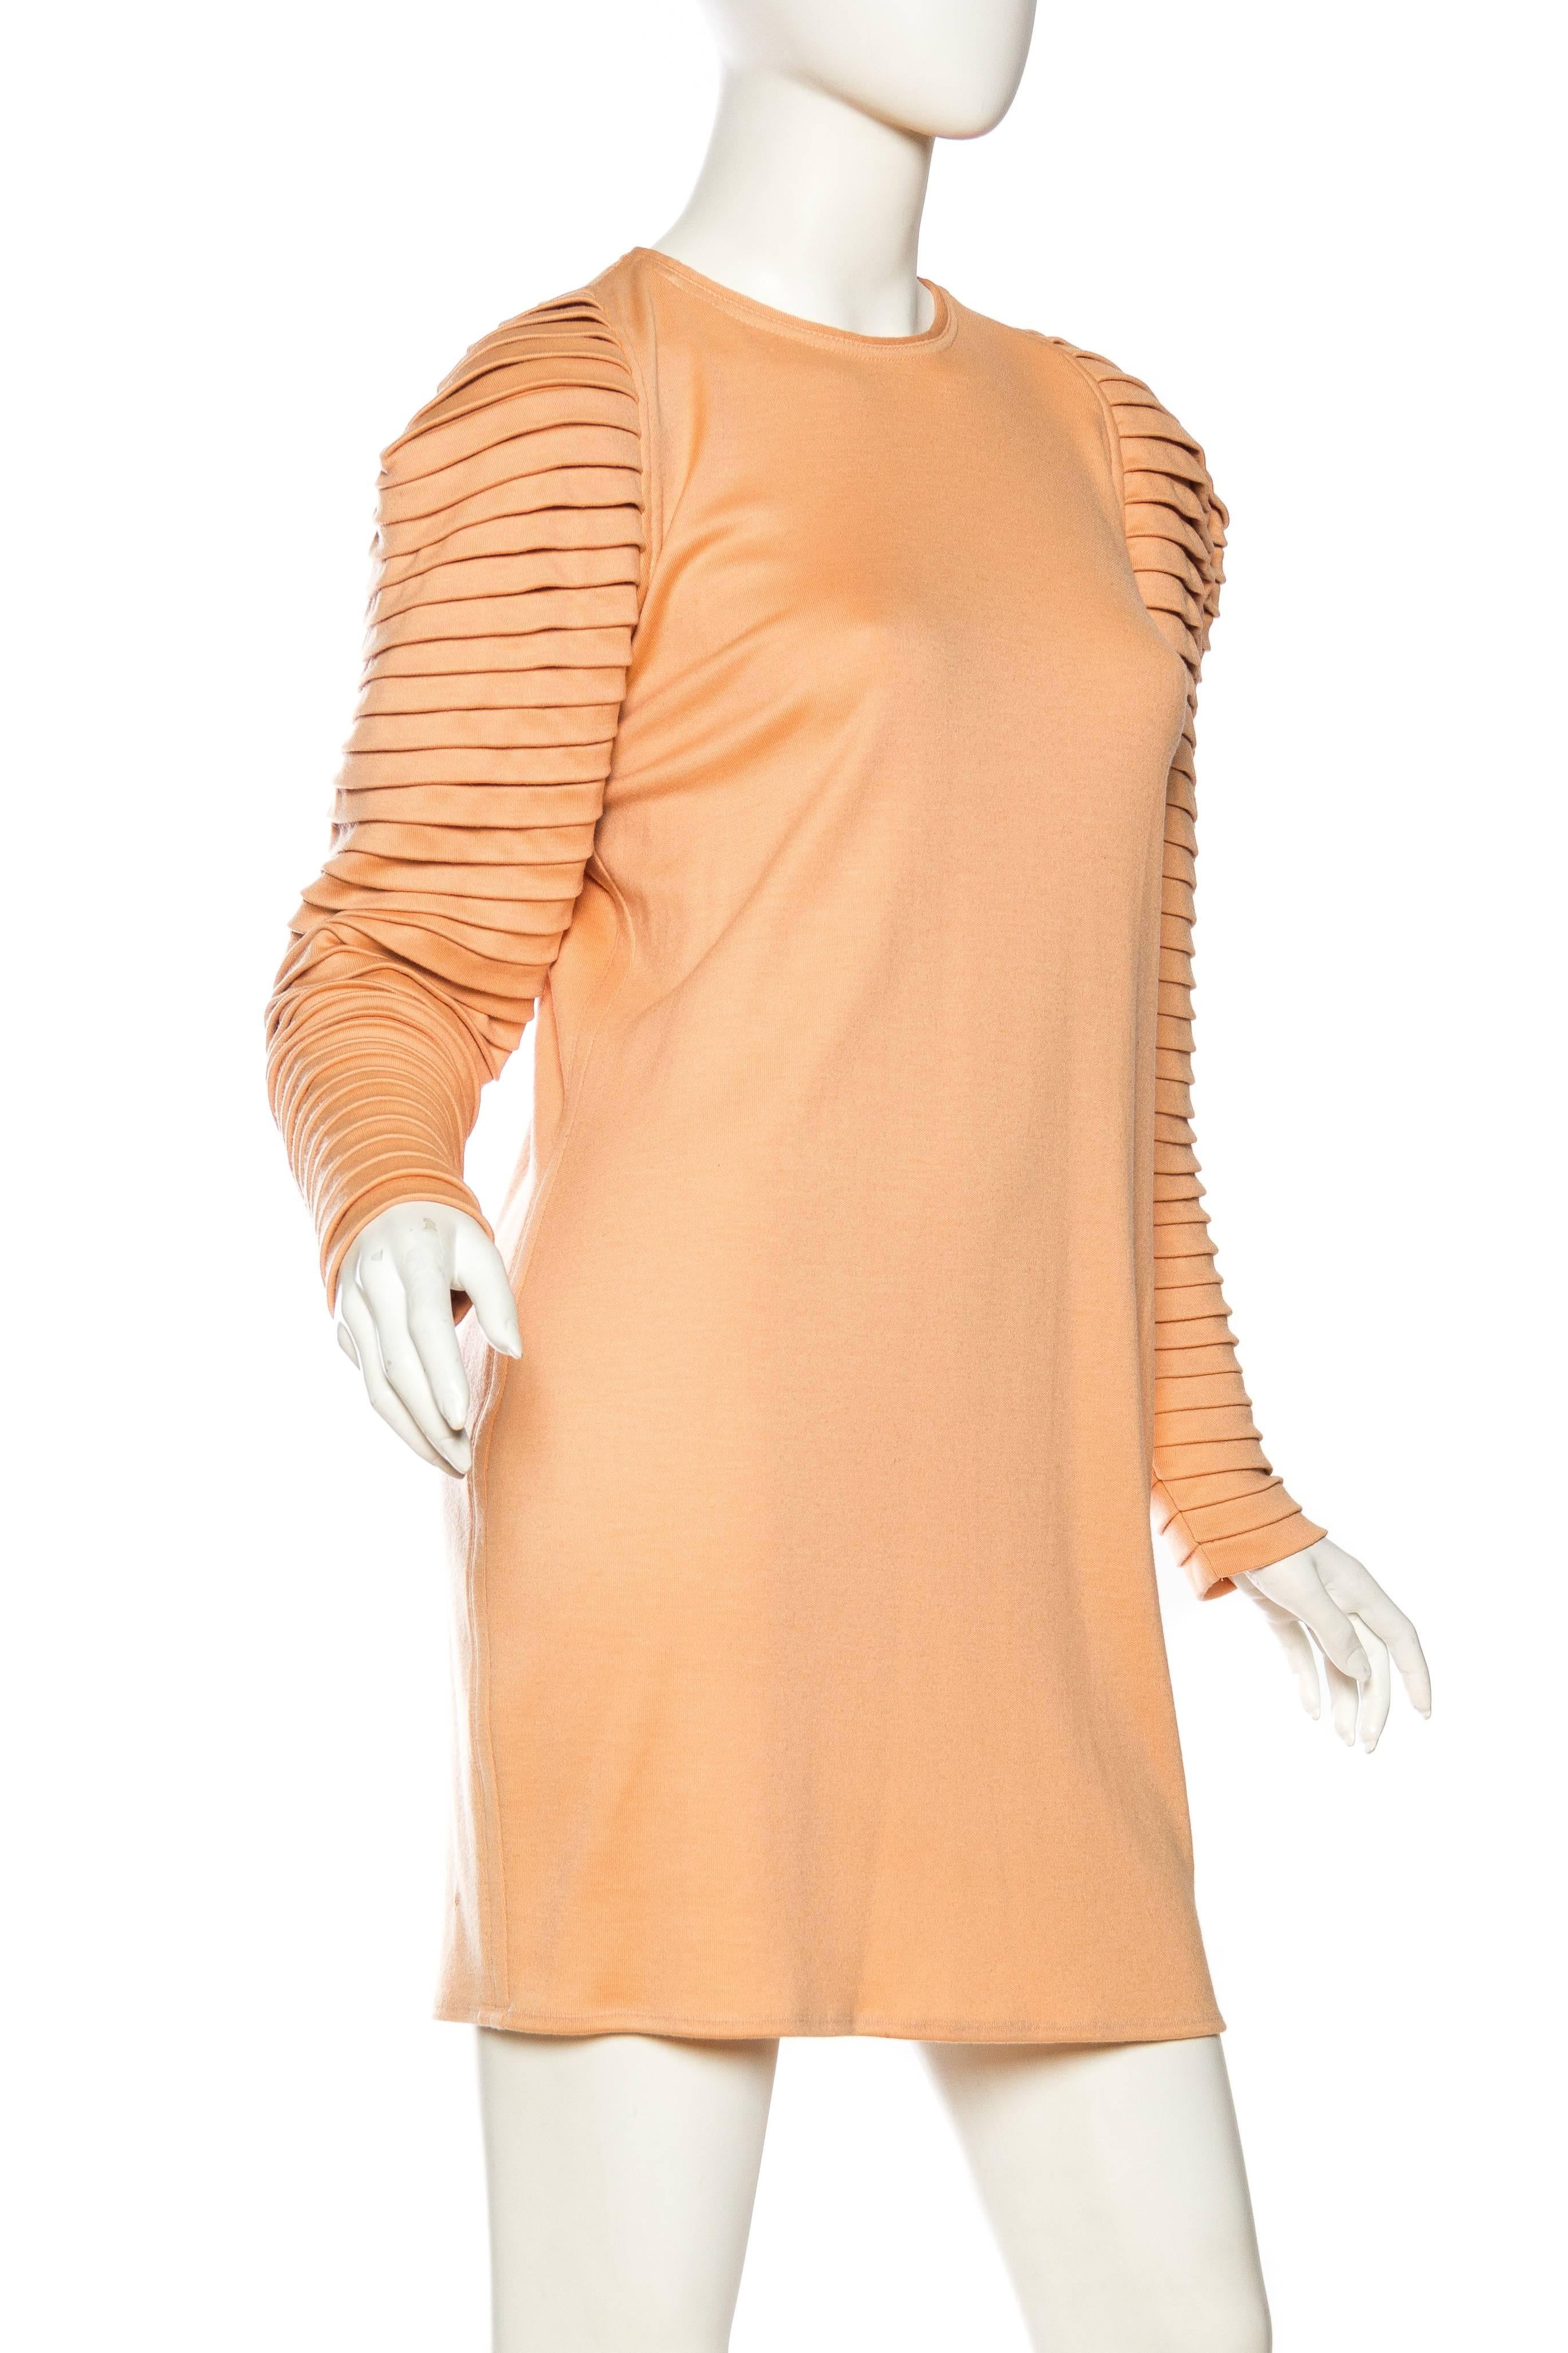 1980s GIANNI VERSACE FOR GENNY Peach Wool Jersey Cozy Long Sleeve Mini Dress 1